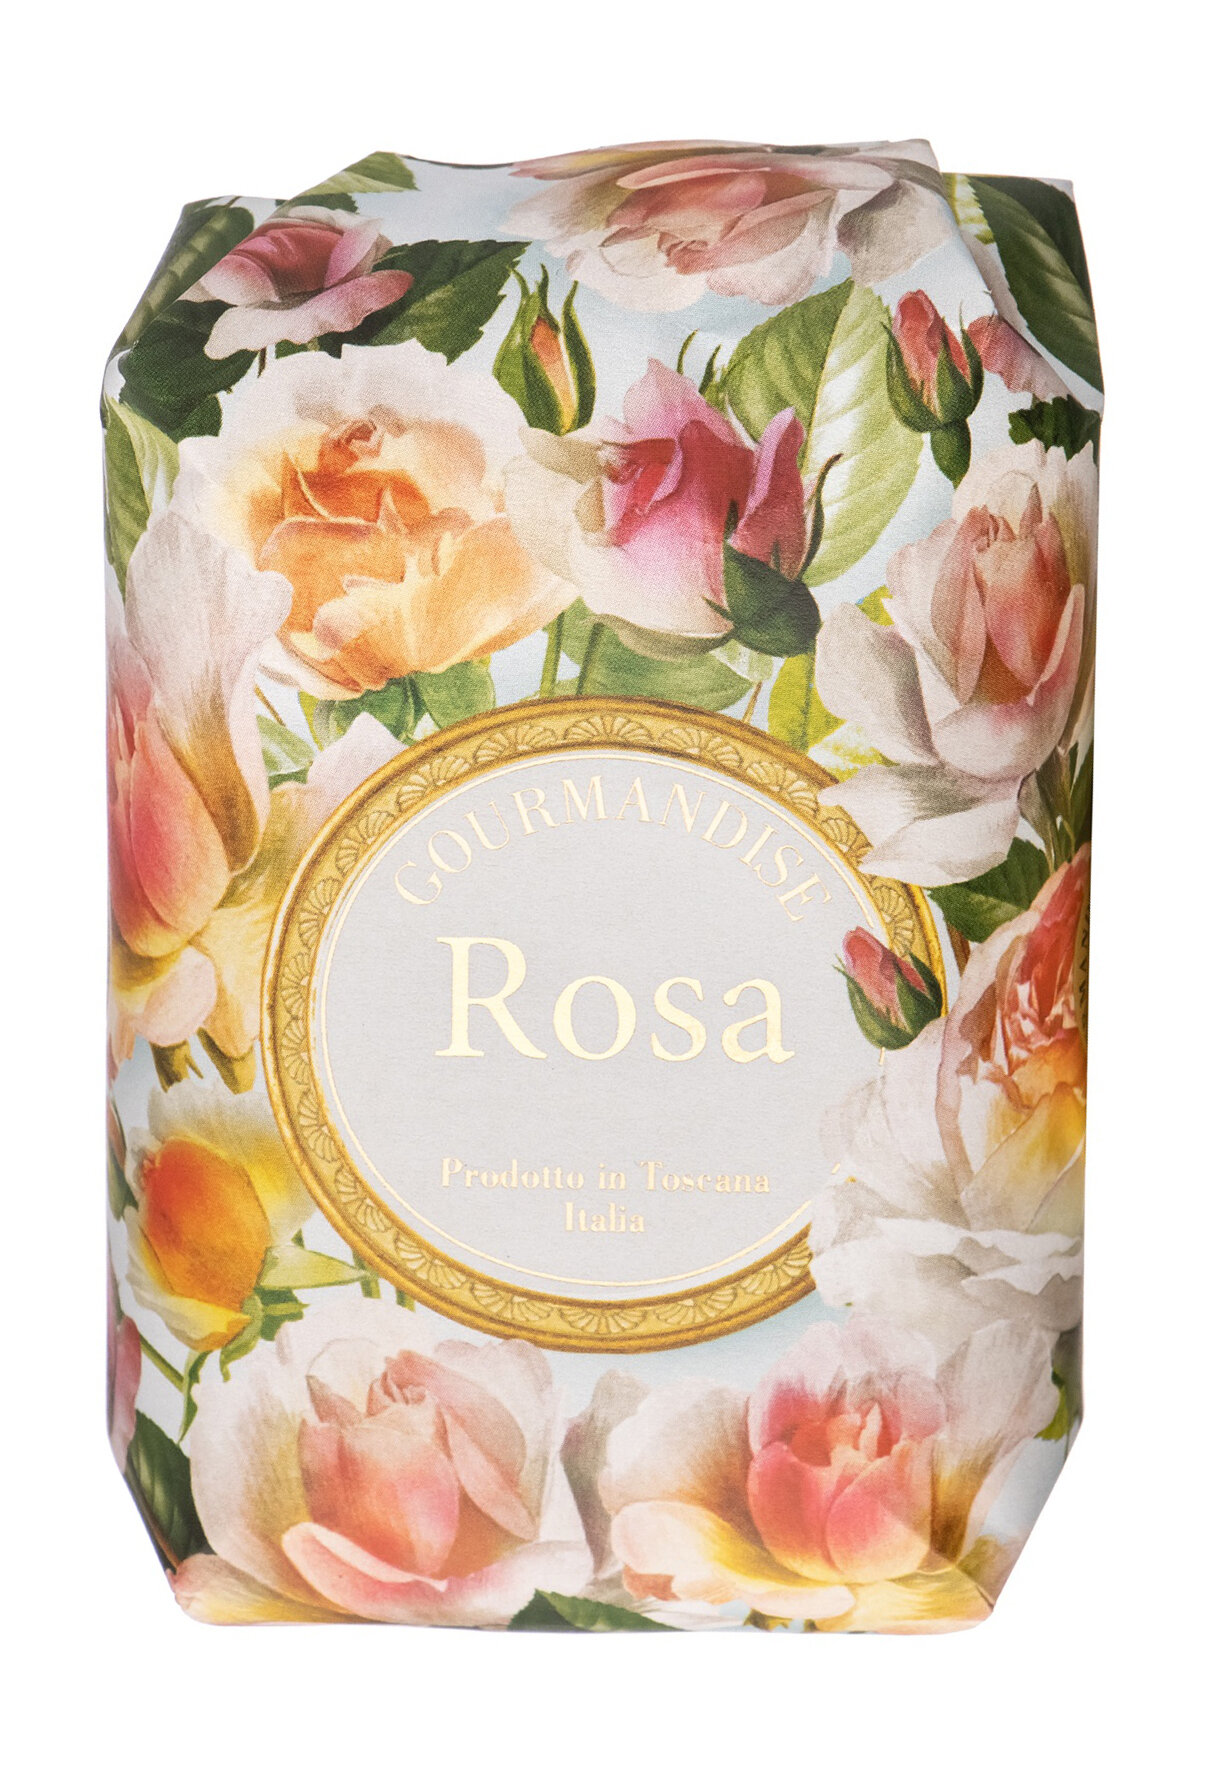 GOURMANDISE Мыло натуральное парфюмированное Роза, 200 г